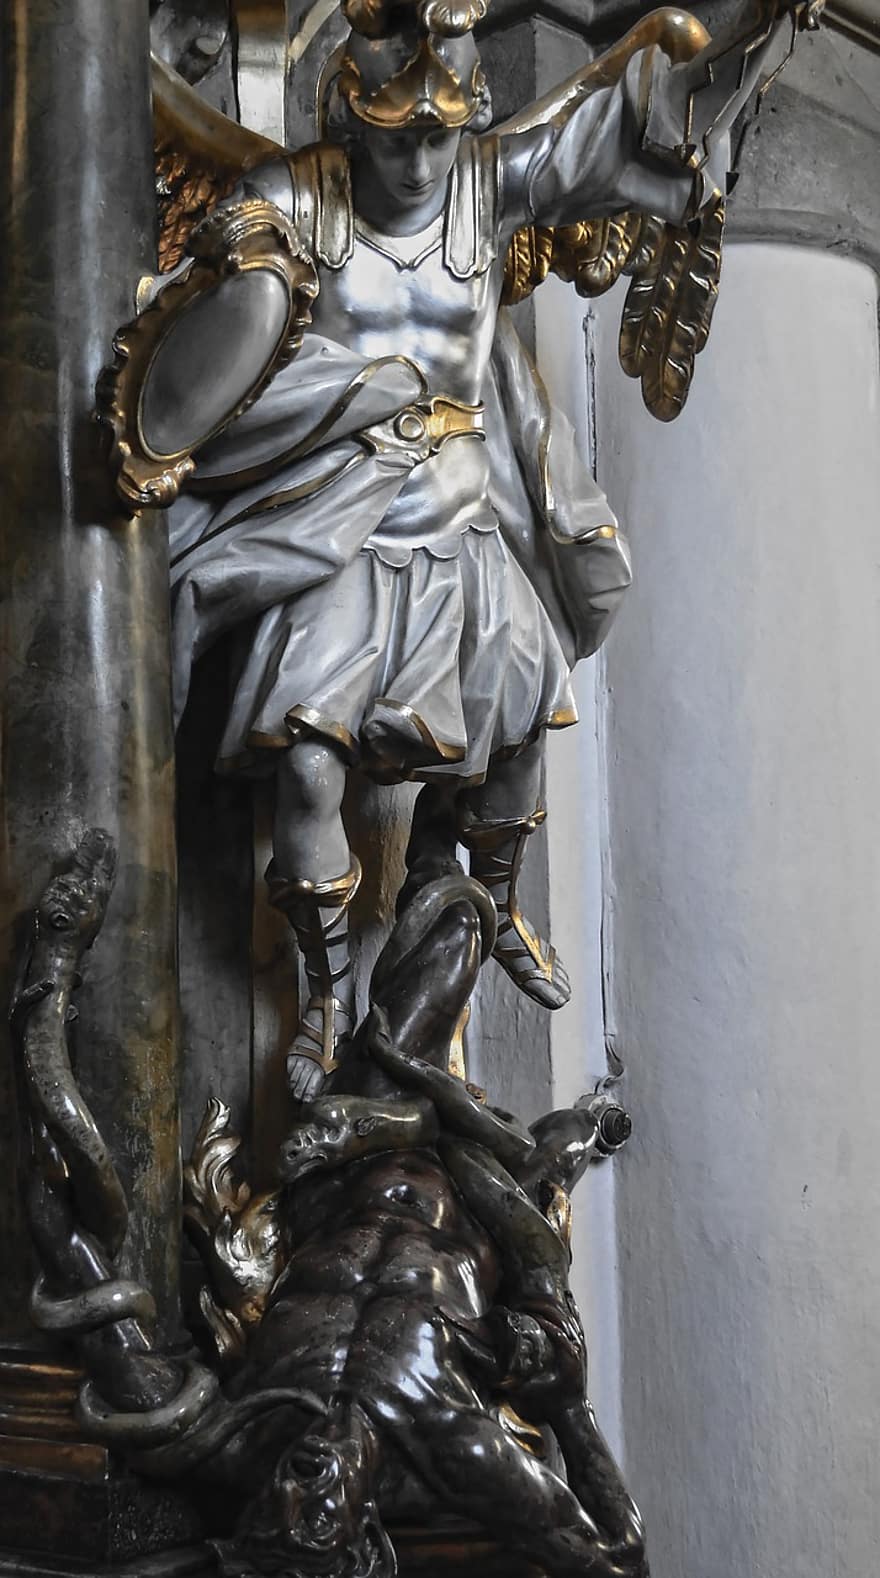 Archangel Michael Statue, Archangel Michael, Good Vs Evil, War In Heaven, Religion, Christianity